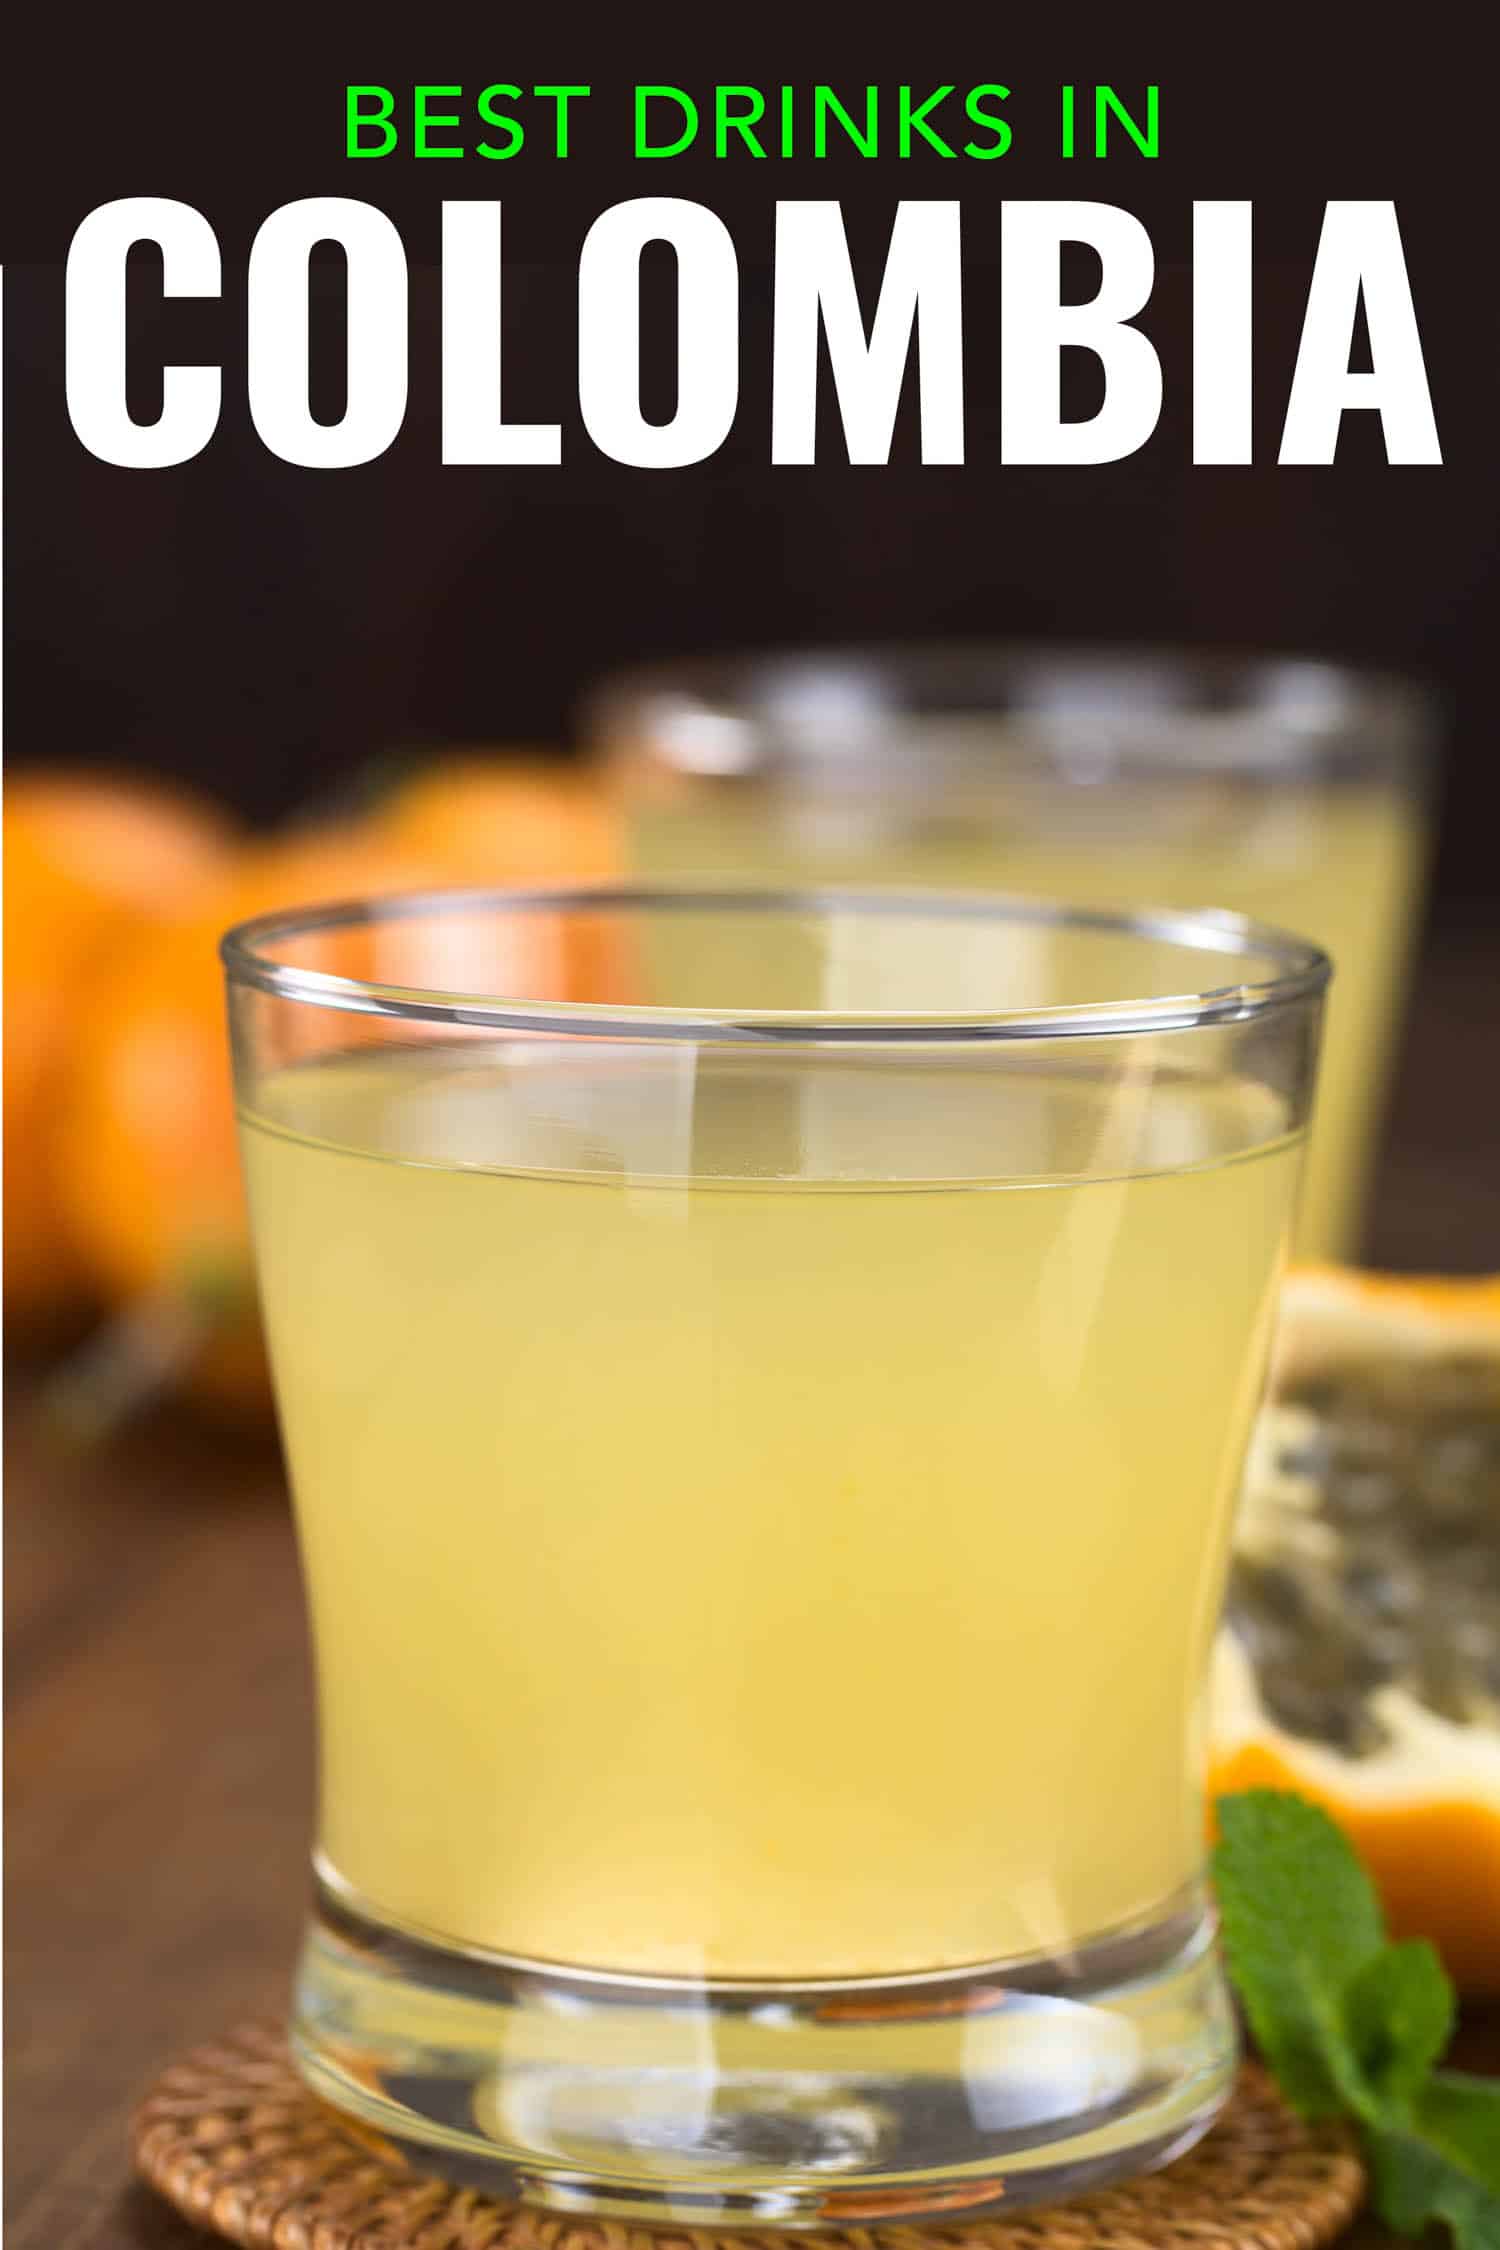 Lulo or naranjilla drink in Colombia